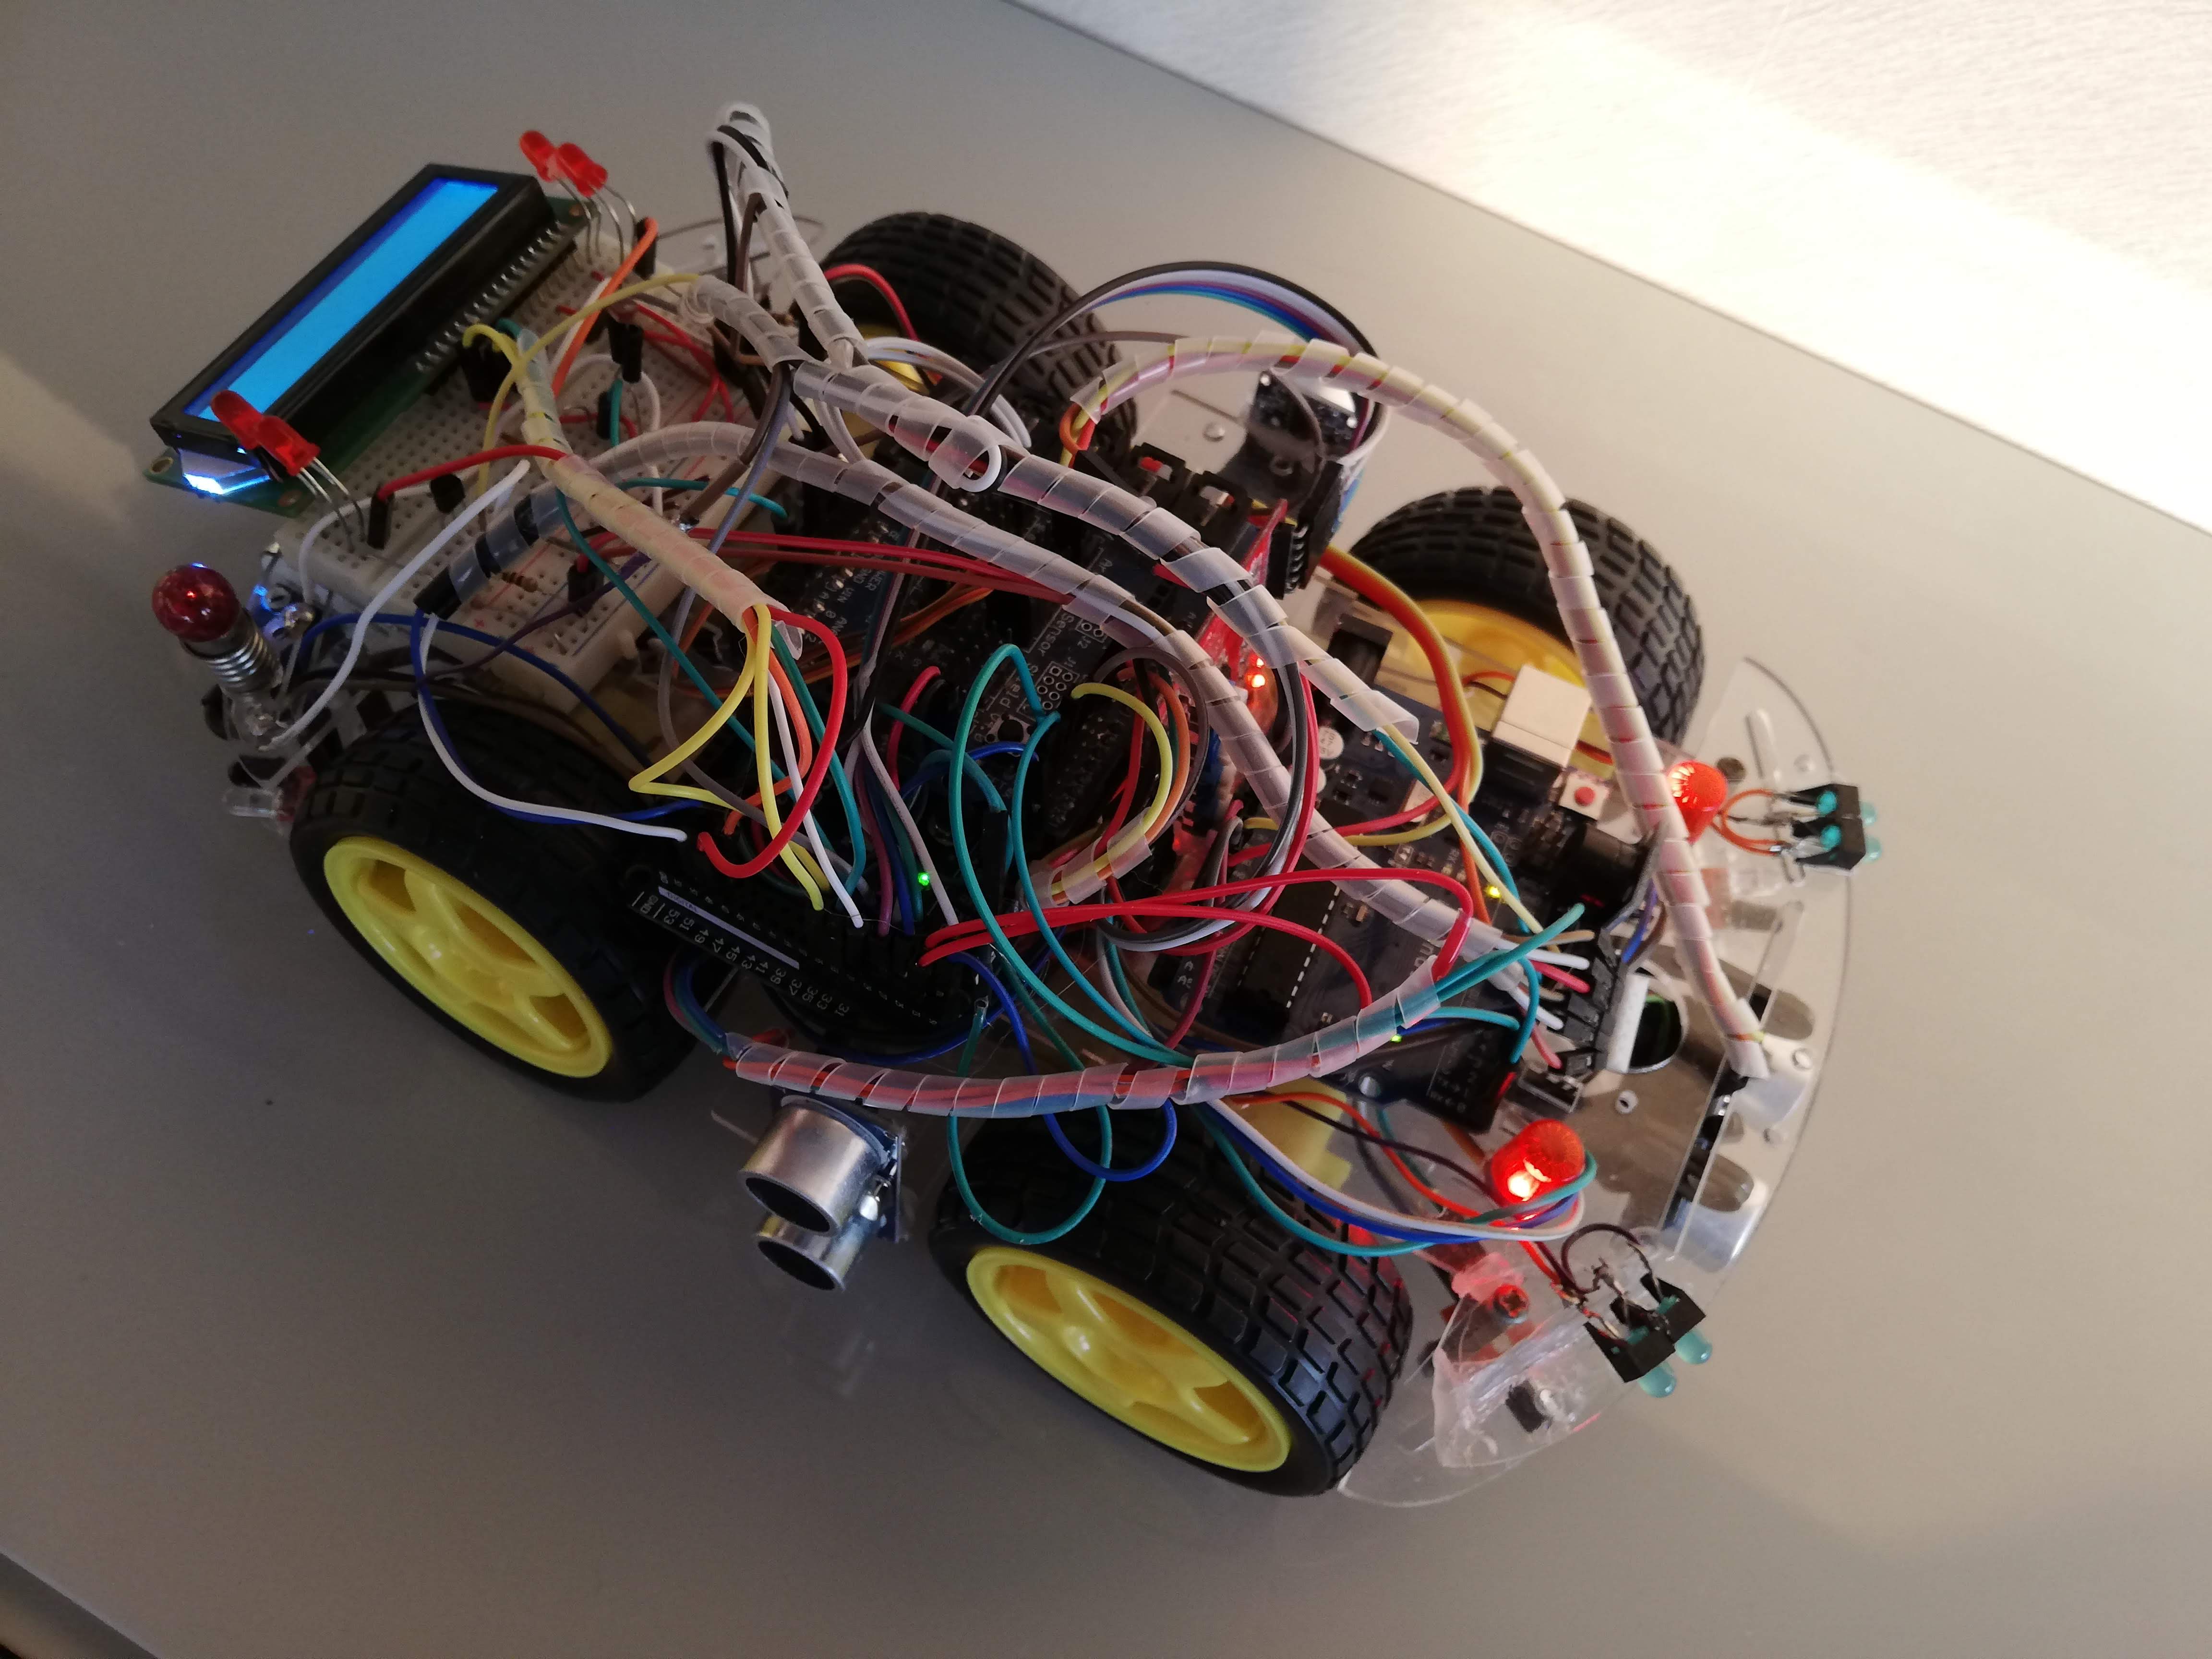 RC Wood Truck, Car (DIY): Arduino + ESP32 + MIT App Inventor